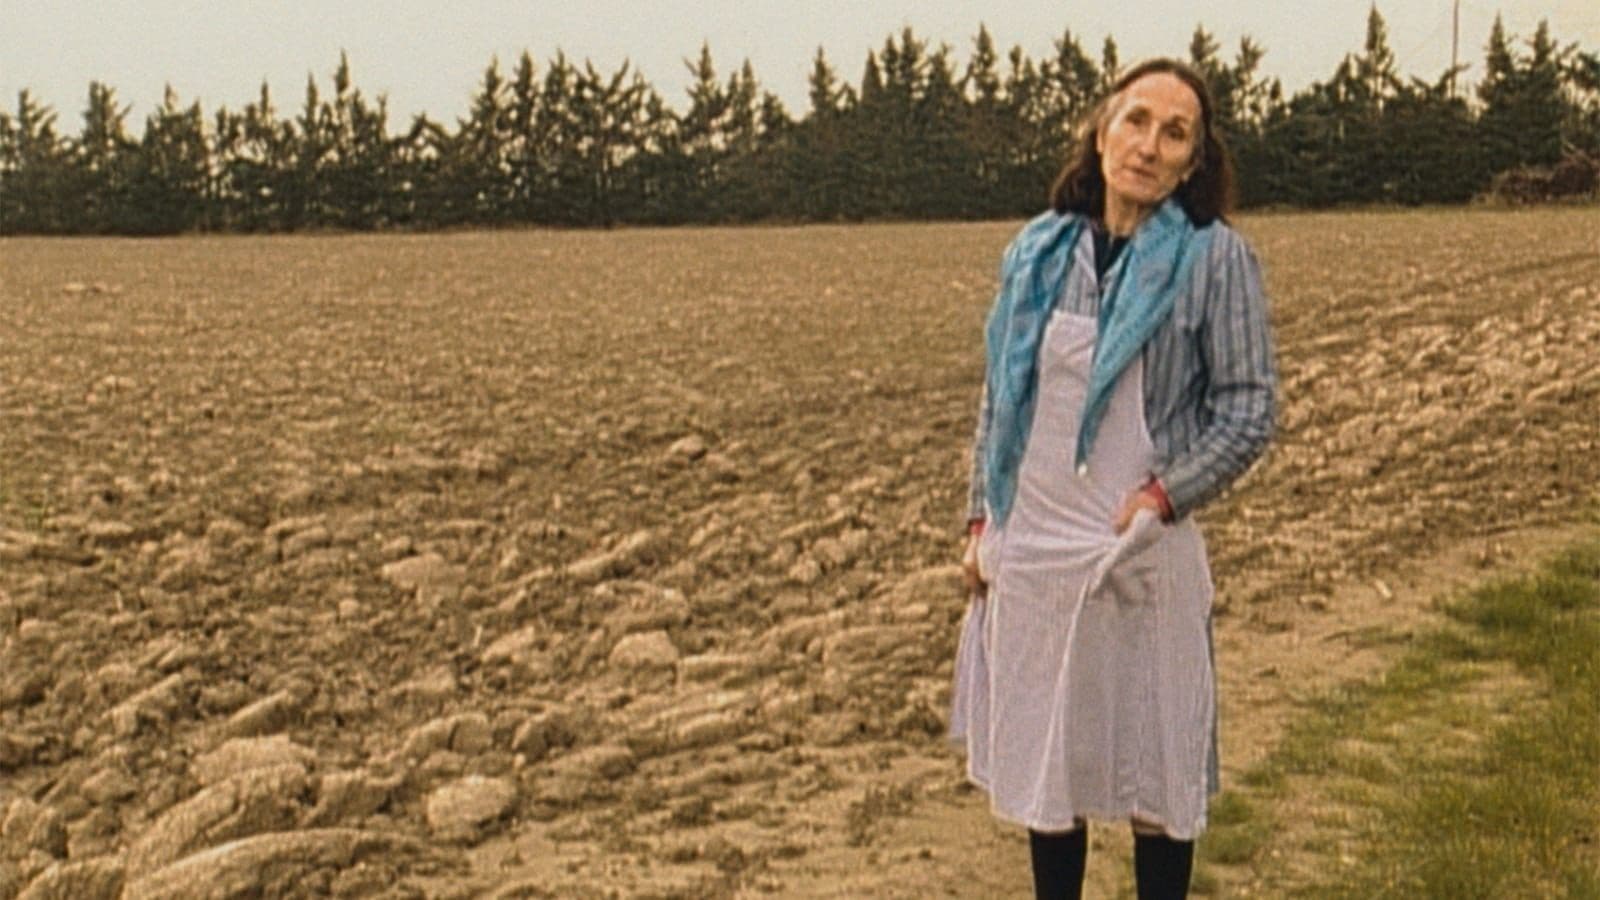 Film still of a woman in a field